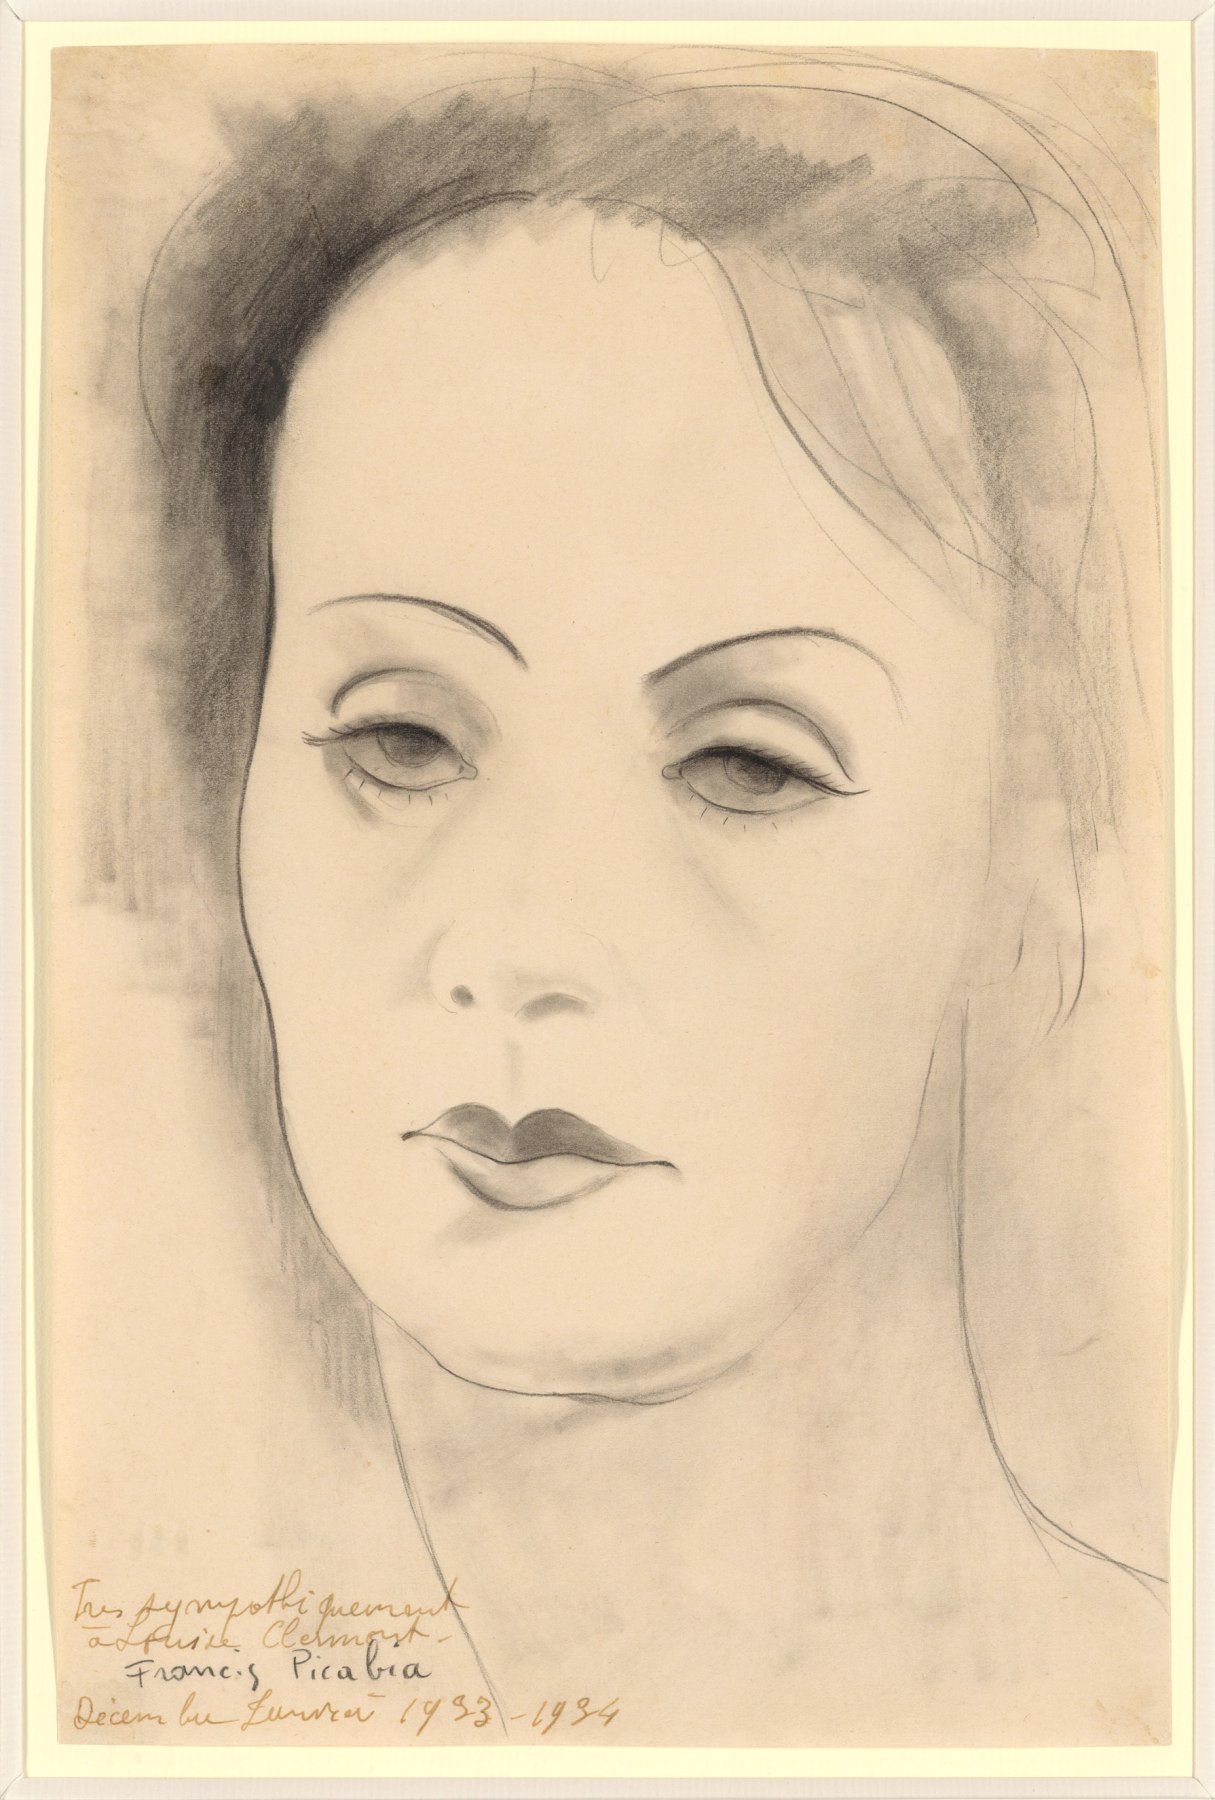 Francis Picabia

&amp;ldquo;Untitled (Portrait de Greta Garbo)&amp;rdquo;, ca. 1933&amp;ndash;1934

Pencil on paper

11 1/2 x 7 1/2 inches

29.5 x 19.5 cm

PIZ 161